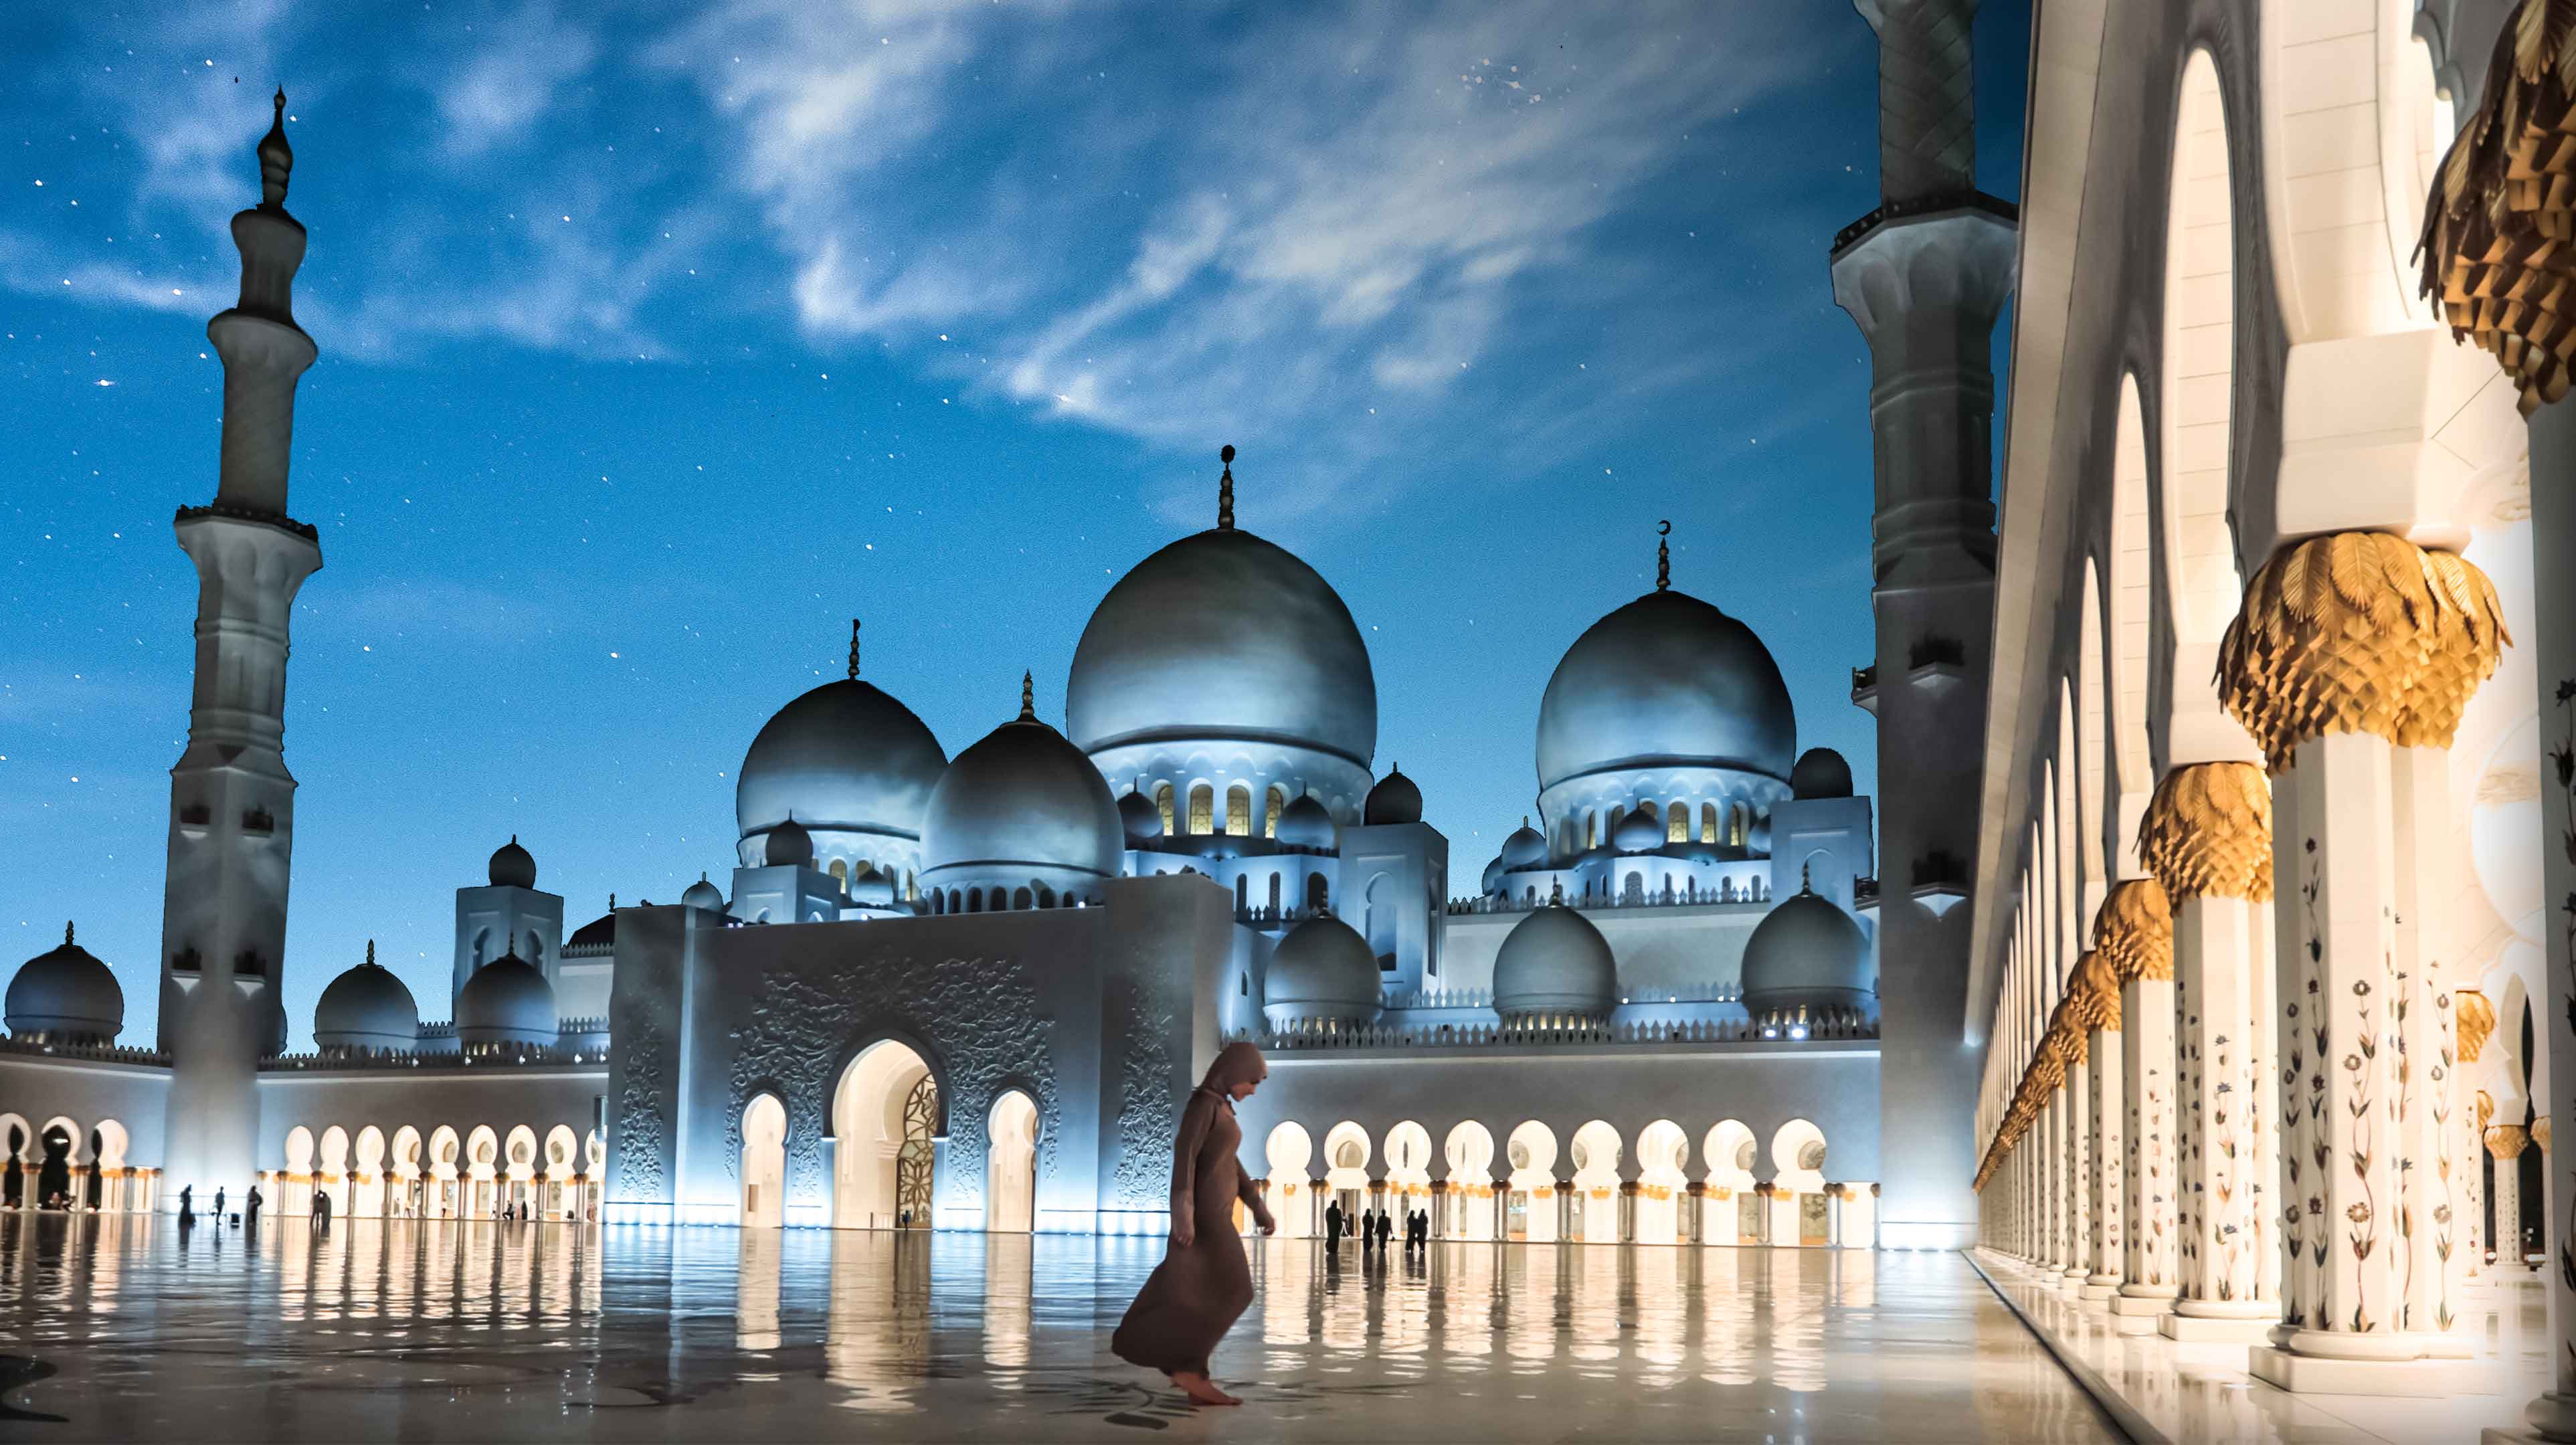 Woman outside Sheikh Zayed Grand Mosque at night